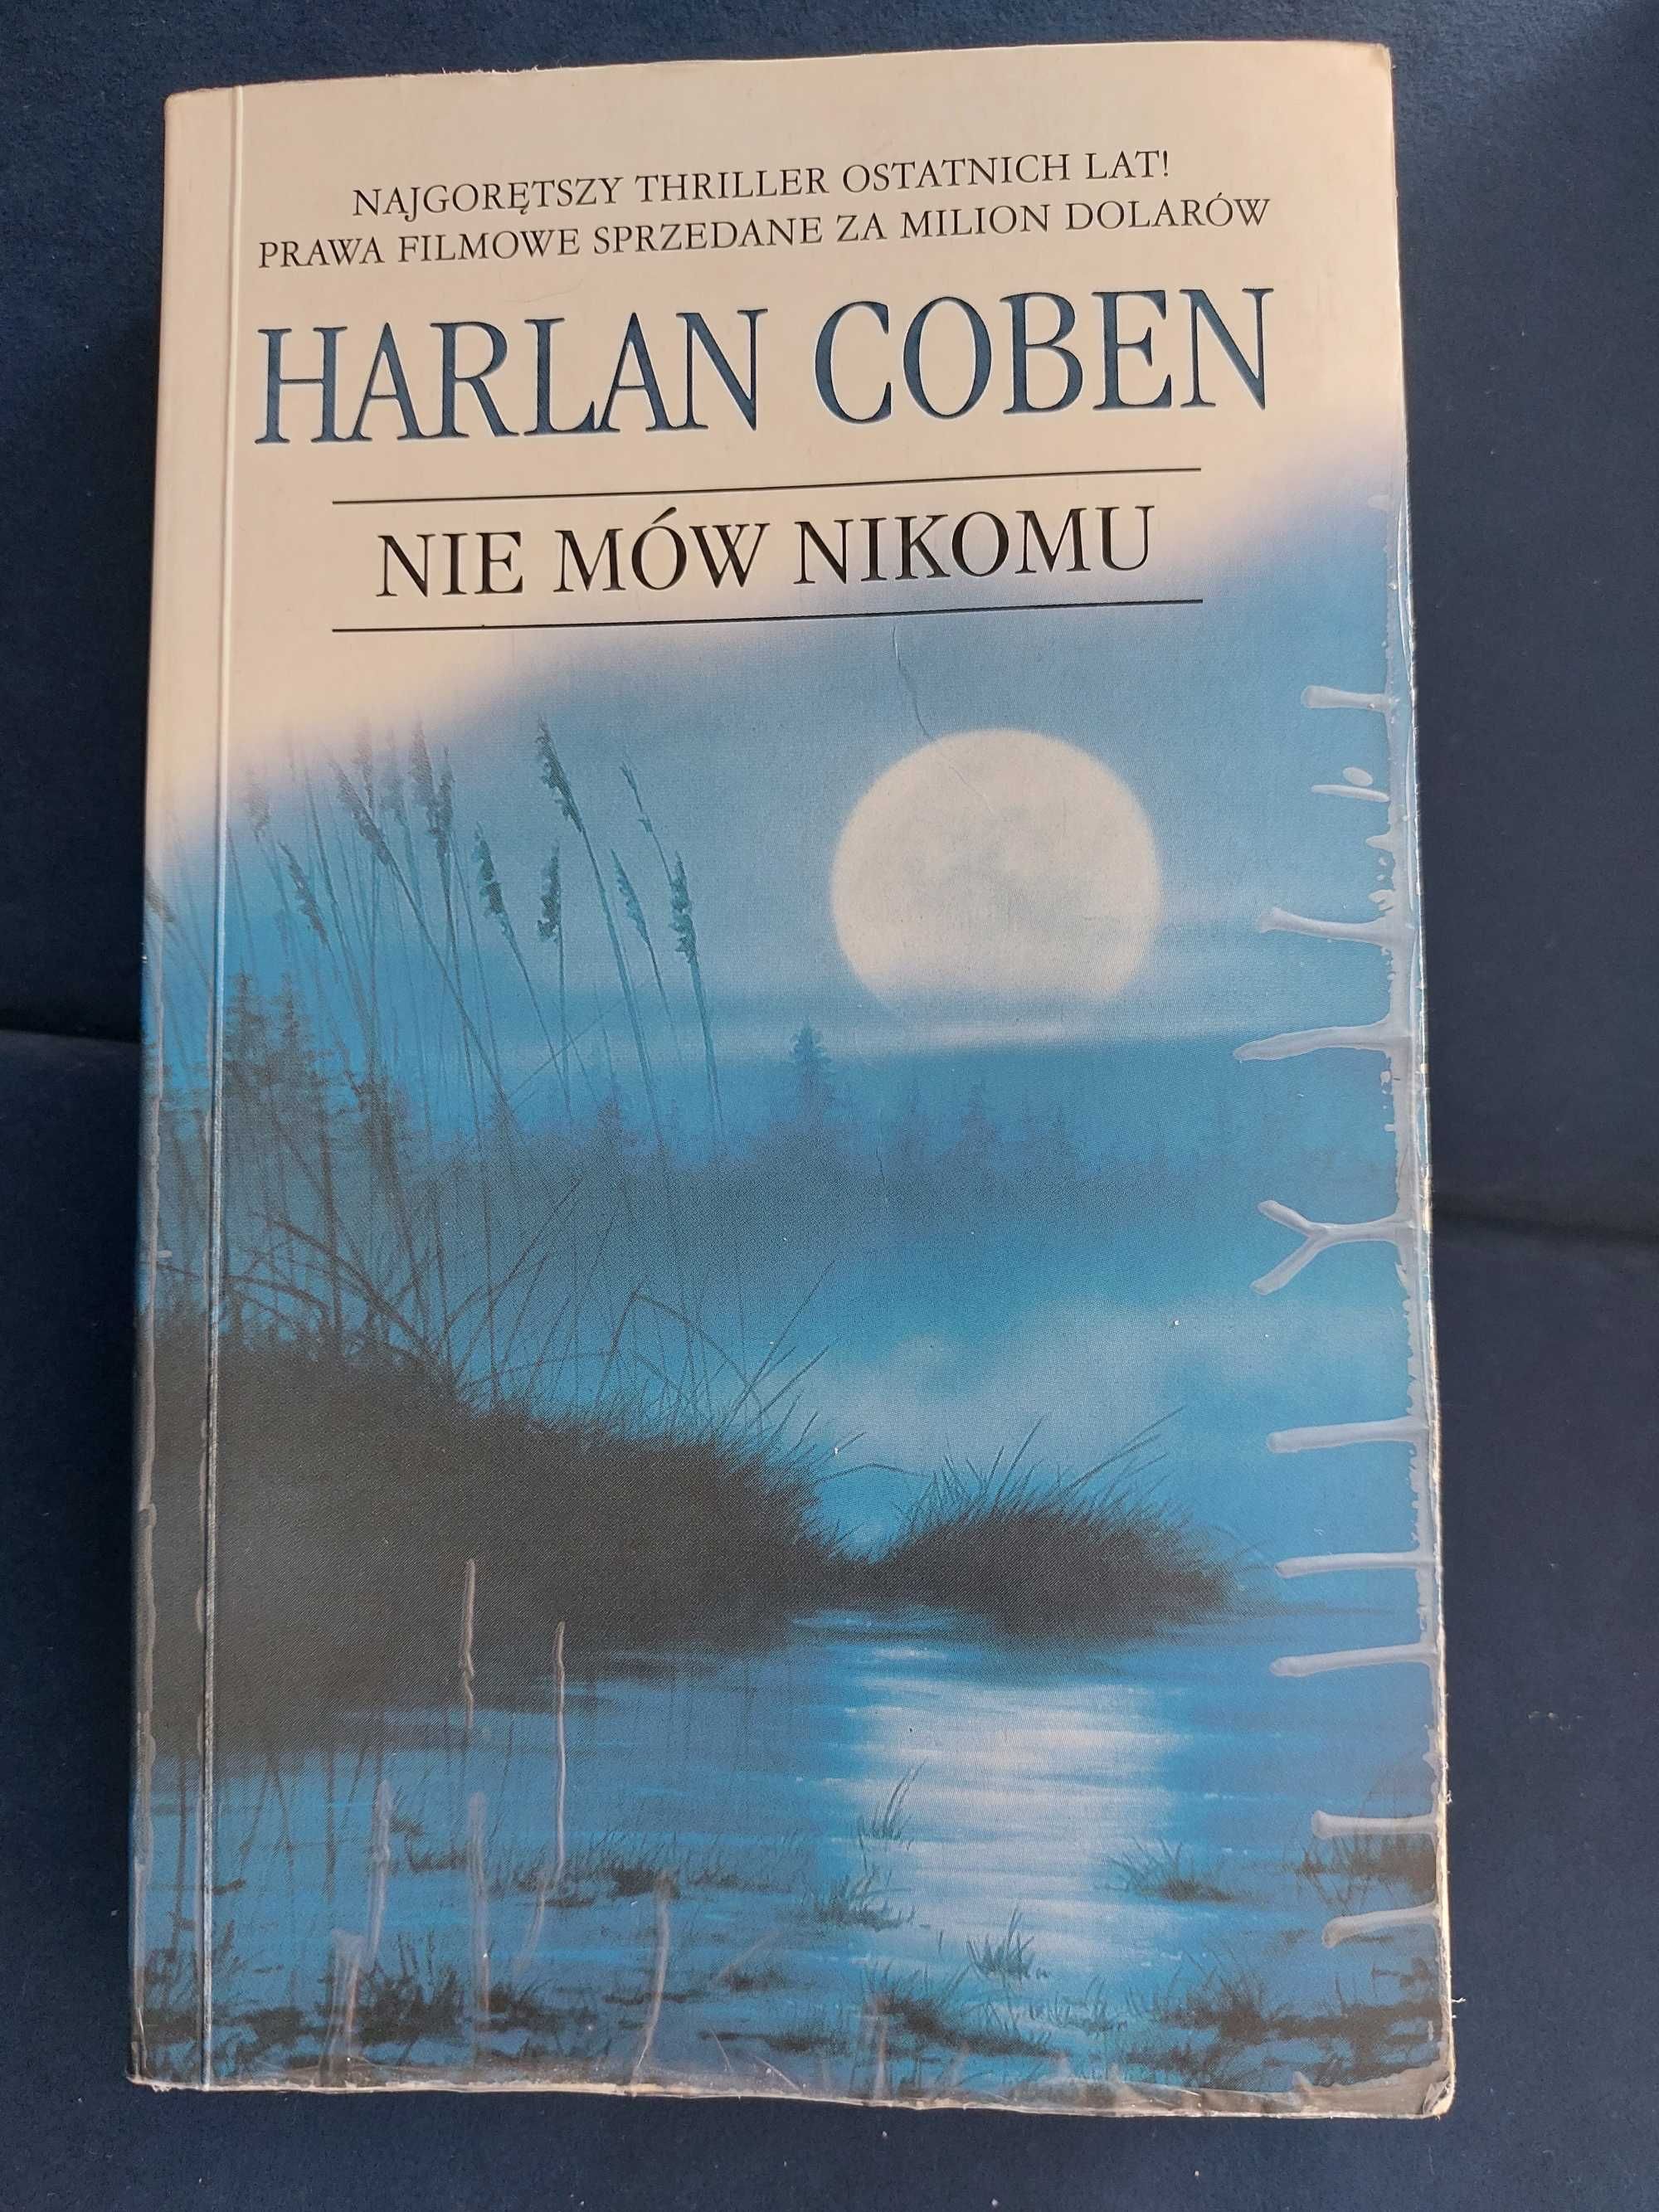 Książka " Nie mów nikomu " Harlan Coben